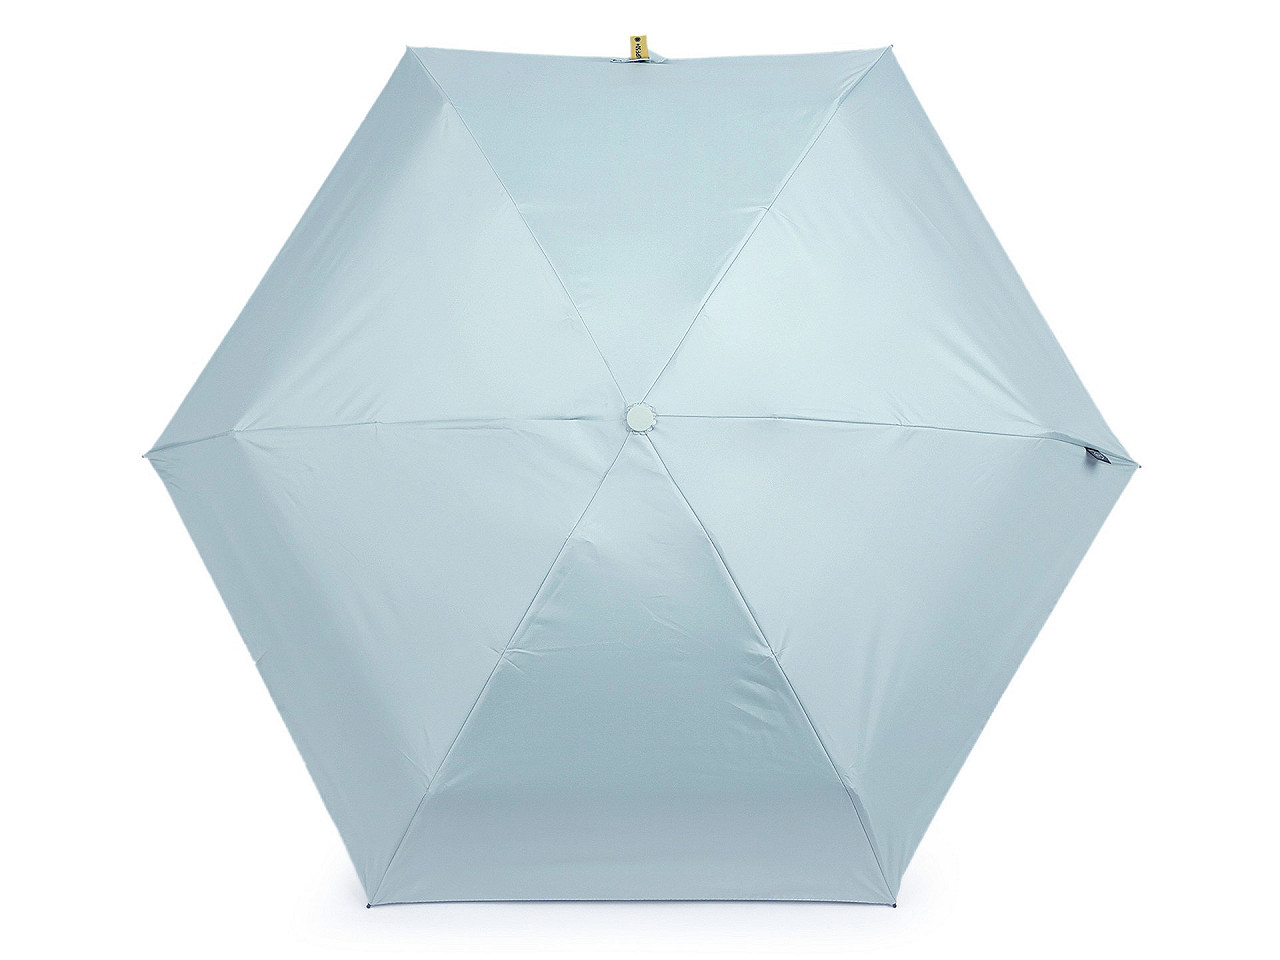 Faltbarer Mini-Regenschirm mit festem Etui, hellblau, 1 Stück